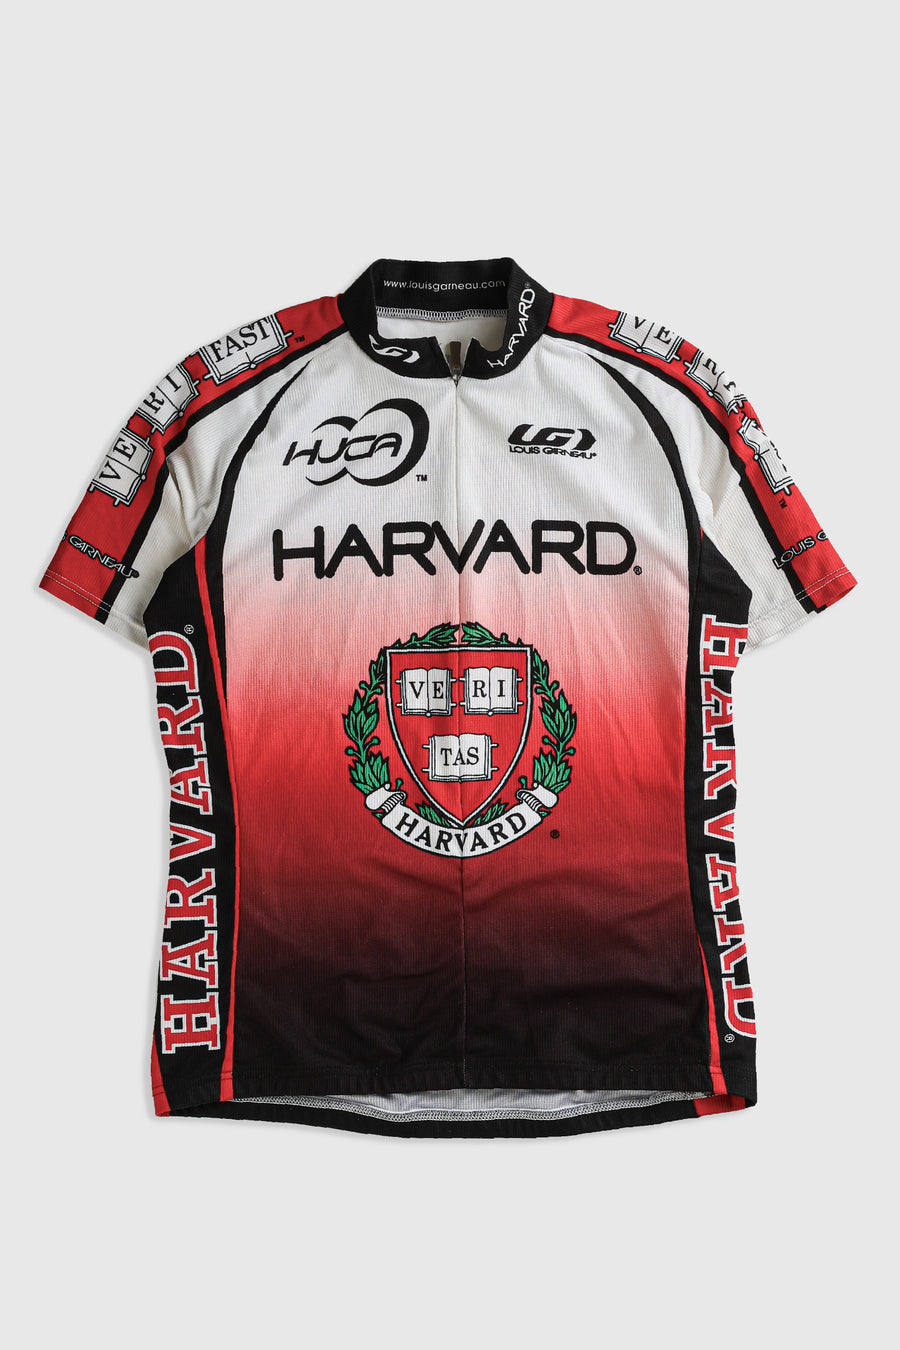 Harvard Cycling Jersey